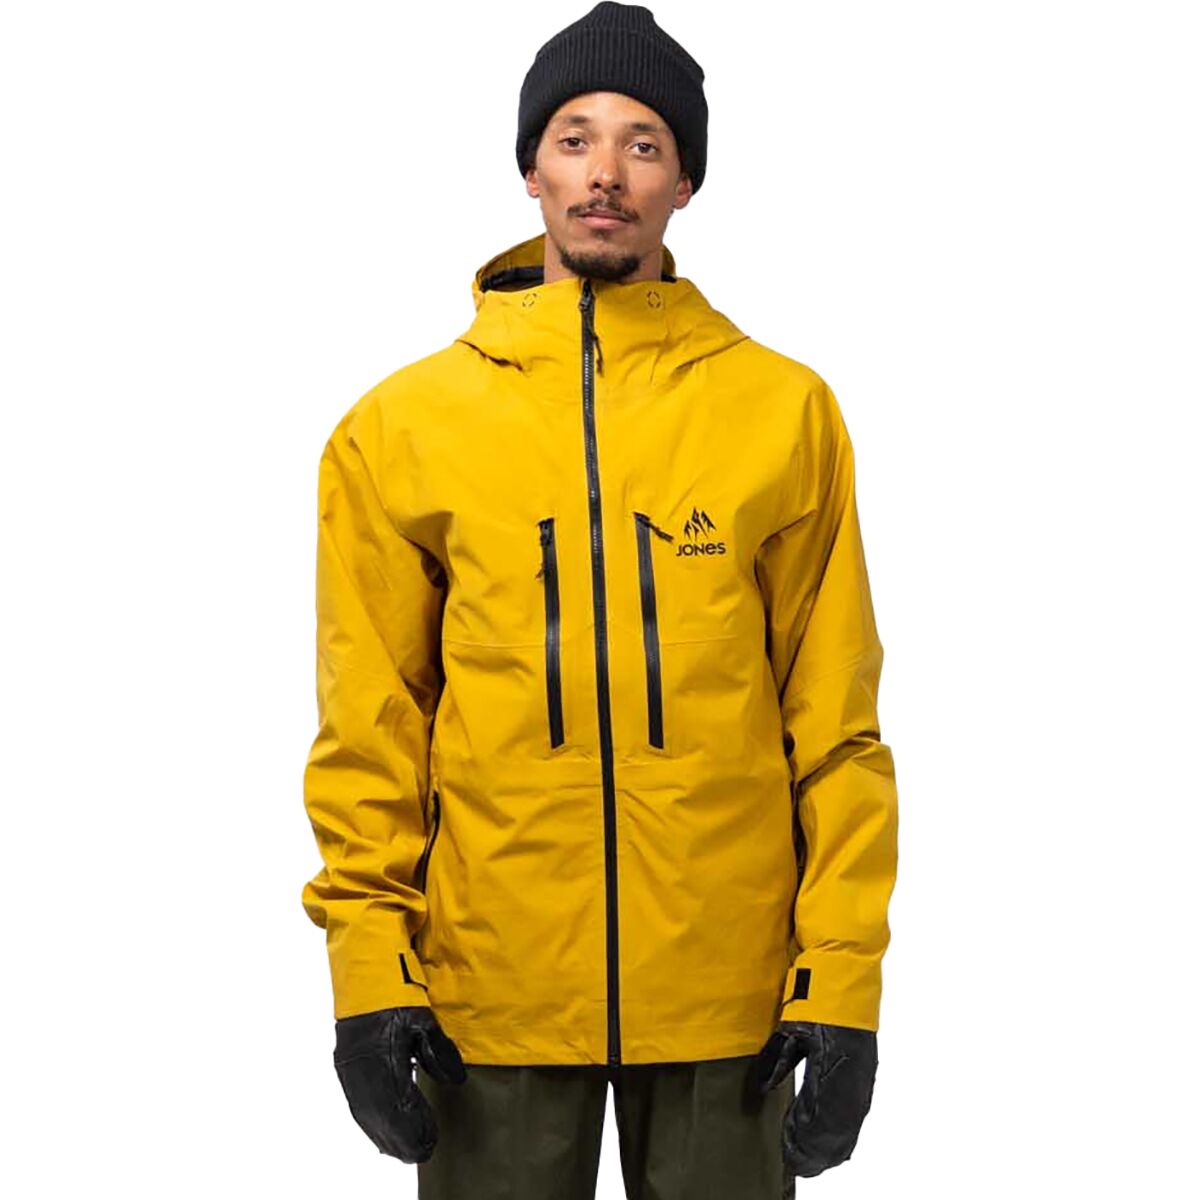 Jones Snowboards Shralpinist Stretch Recycled Jacket - Men's Sunrise Gold